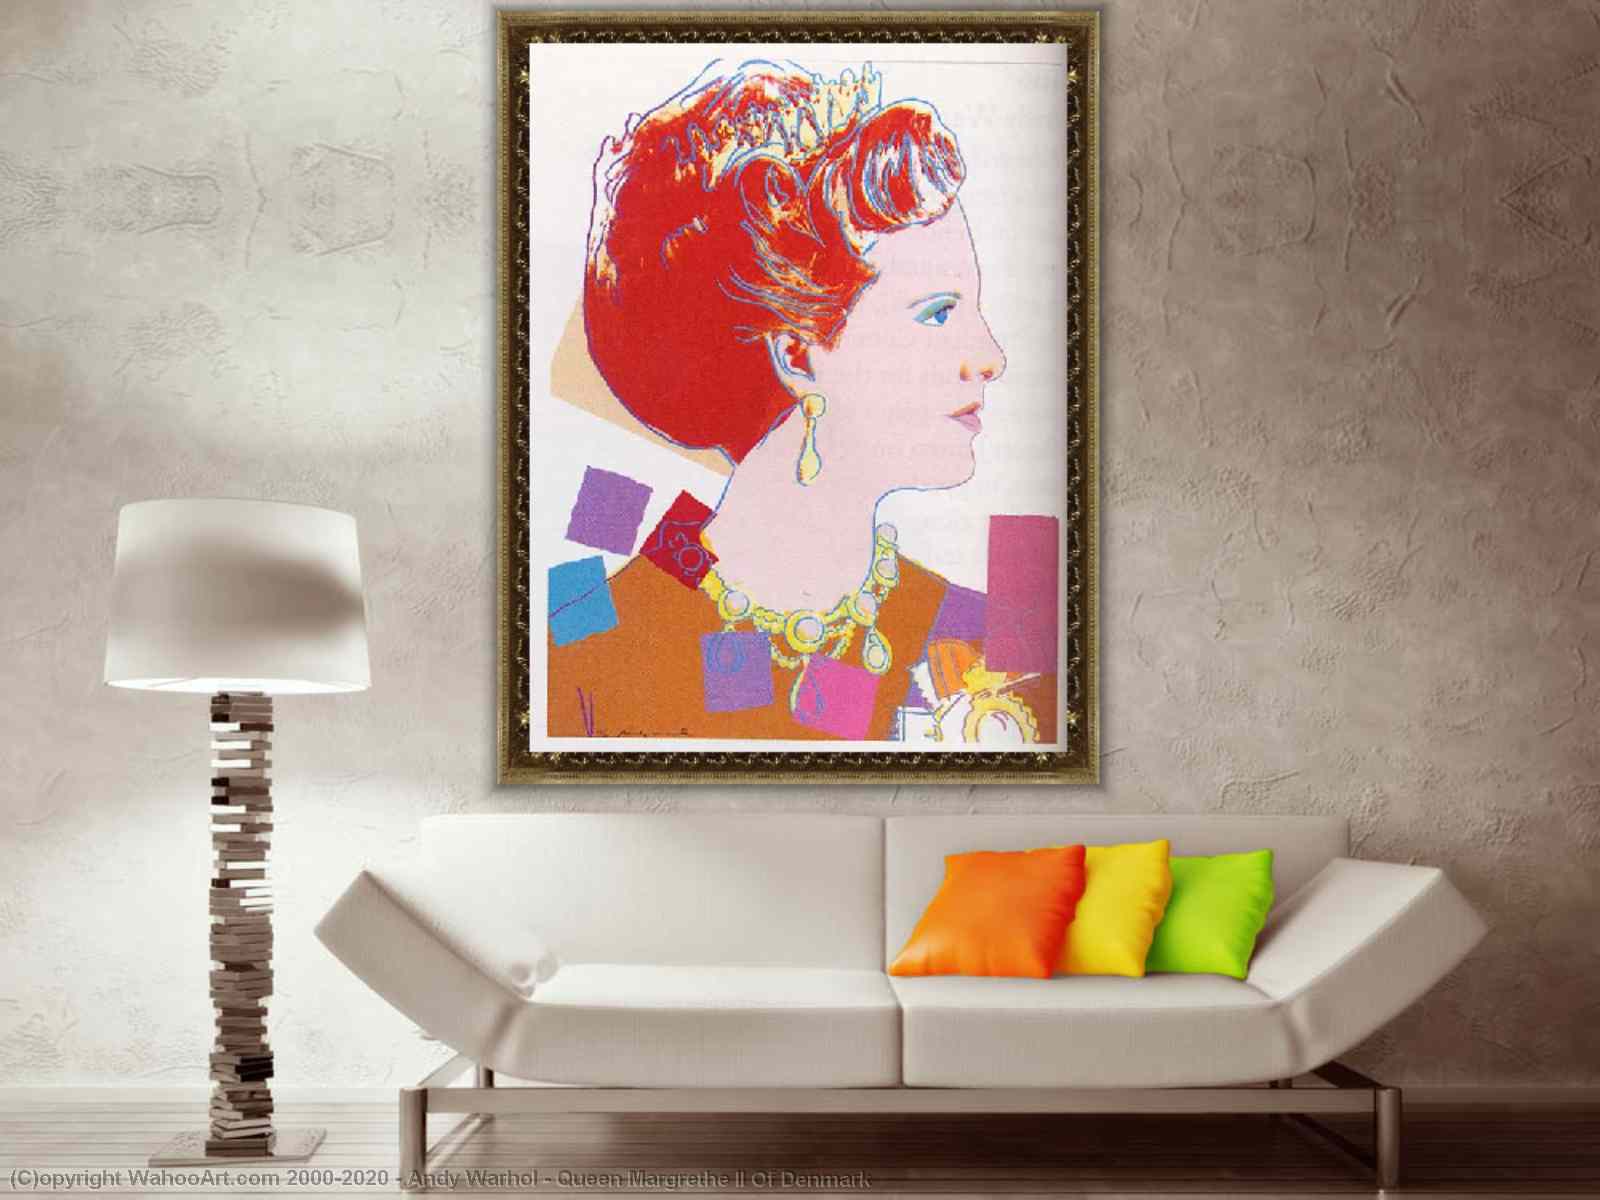 Queen Margrethe II Of Denmark by Andy Warhol | Artwork Replica Pop 